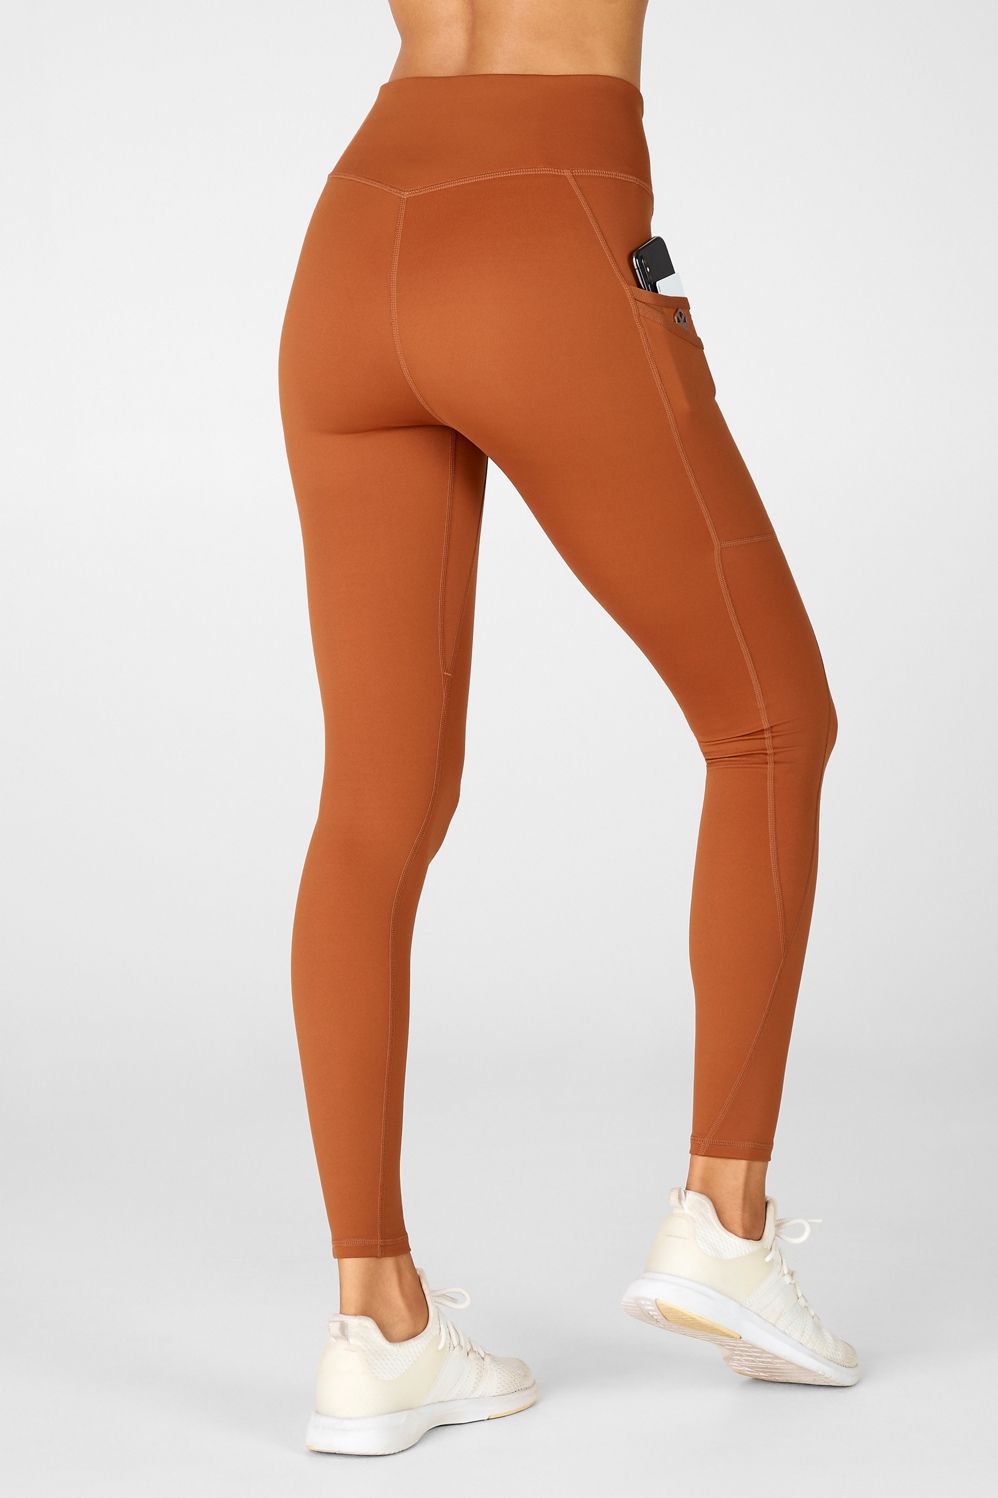 Fabletics Solid Orange Red Active Pants Size XS(estimate) - 56% off